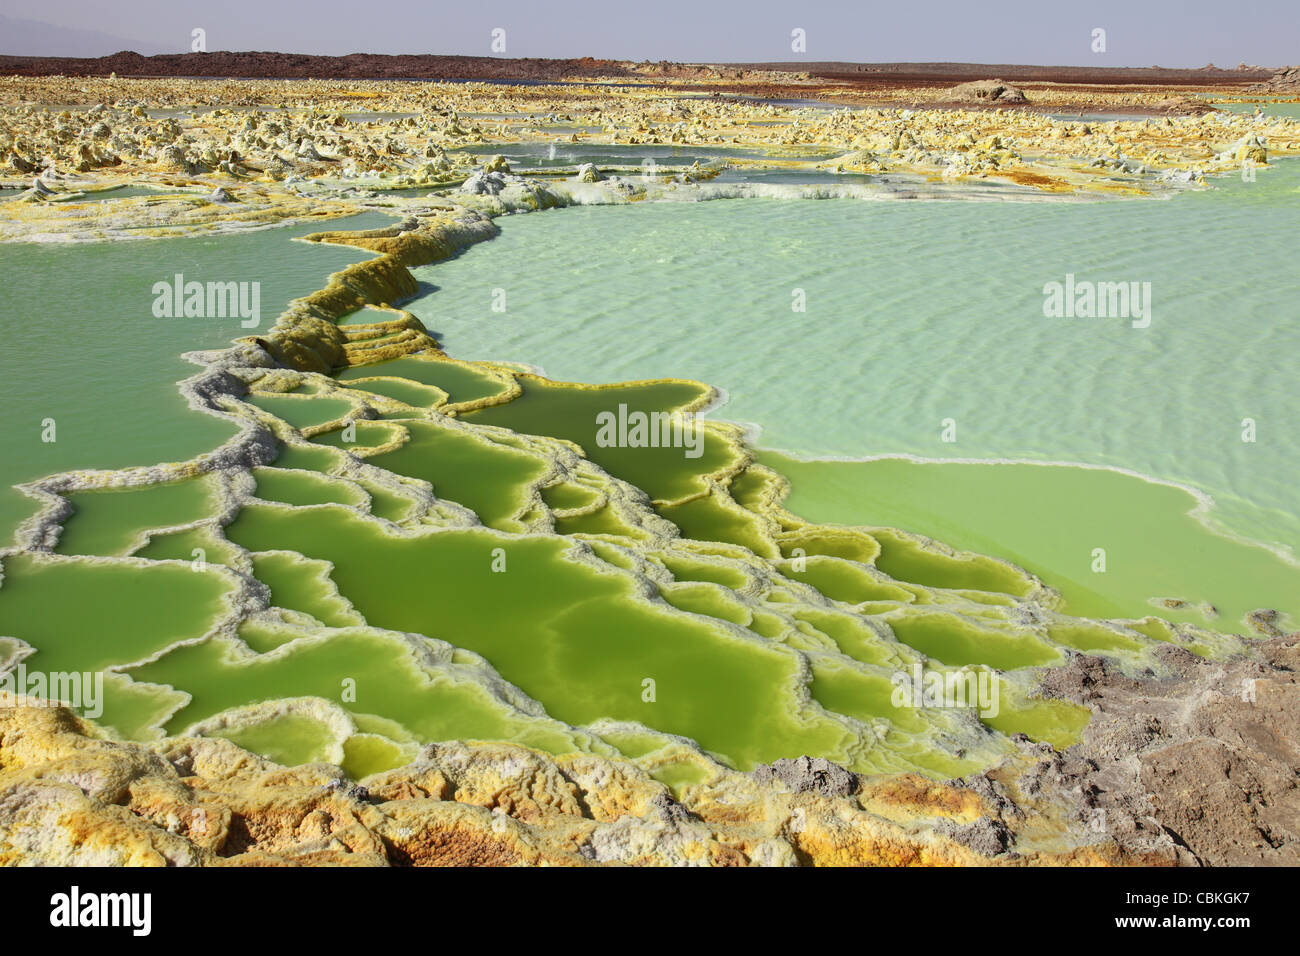 Dallol área geotérmica, terraza de sinterización como estructuras formadas por depósitos de sal de potasio salmuera hot springs, Etiopía. Foto de stock